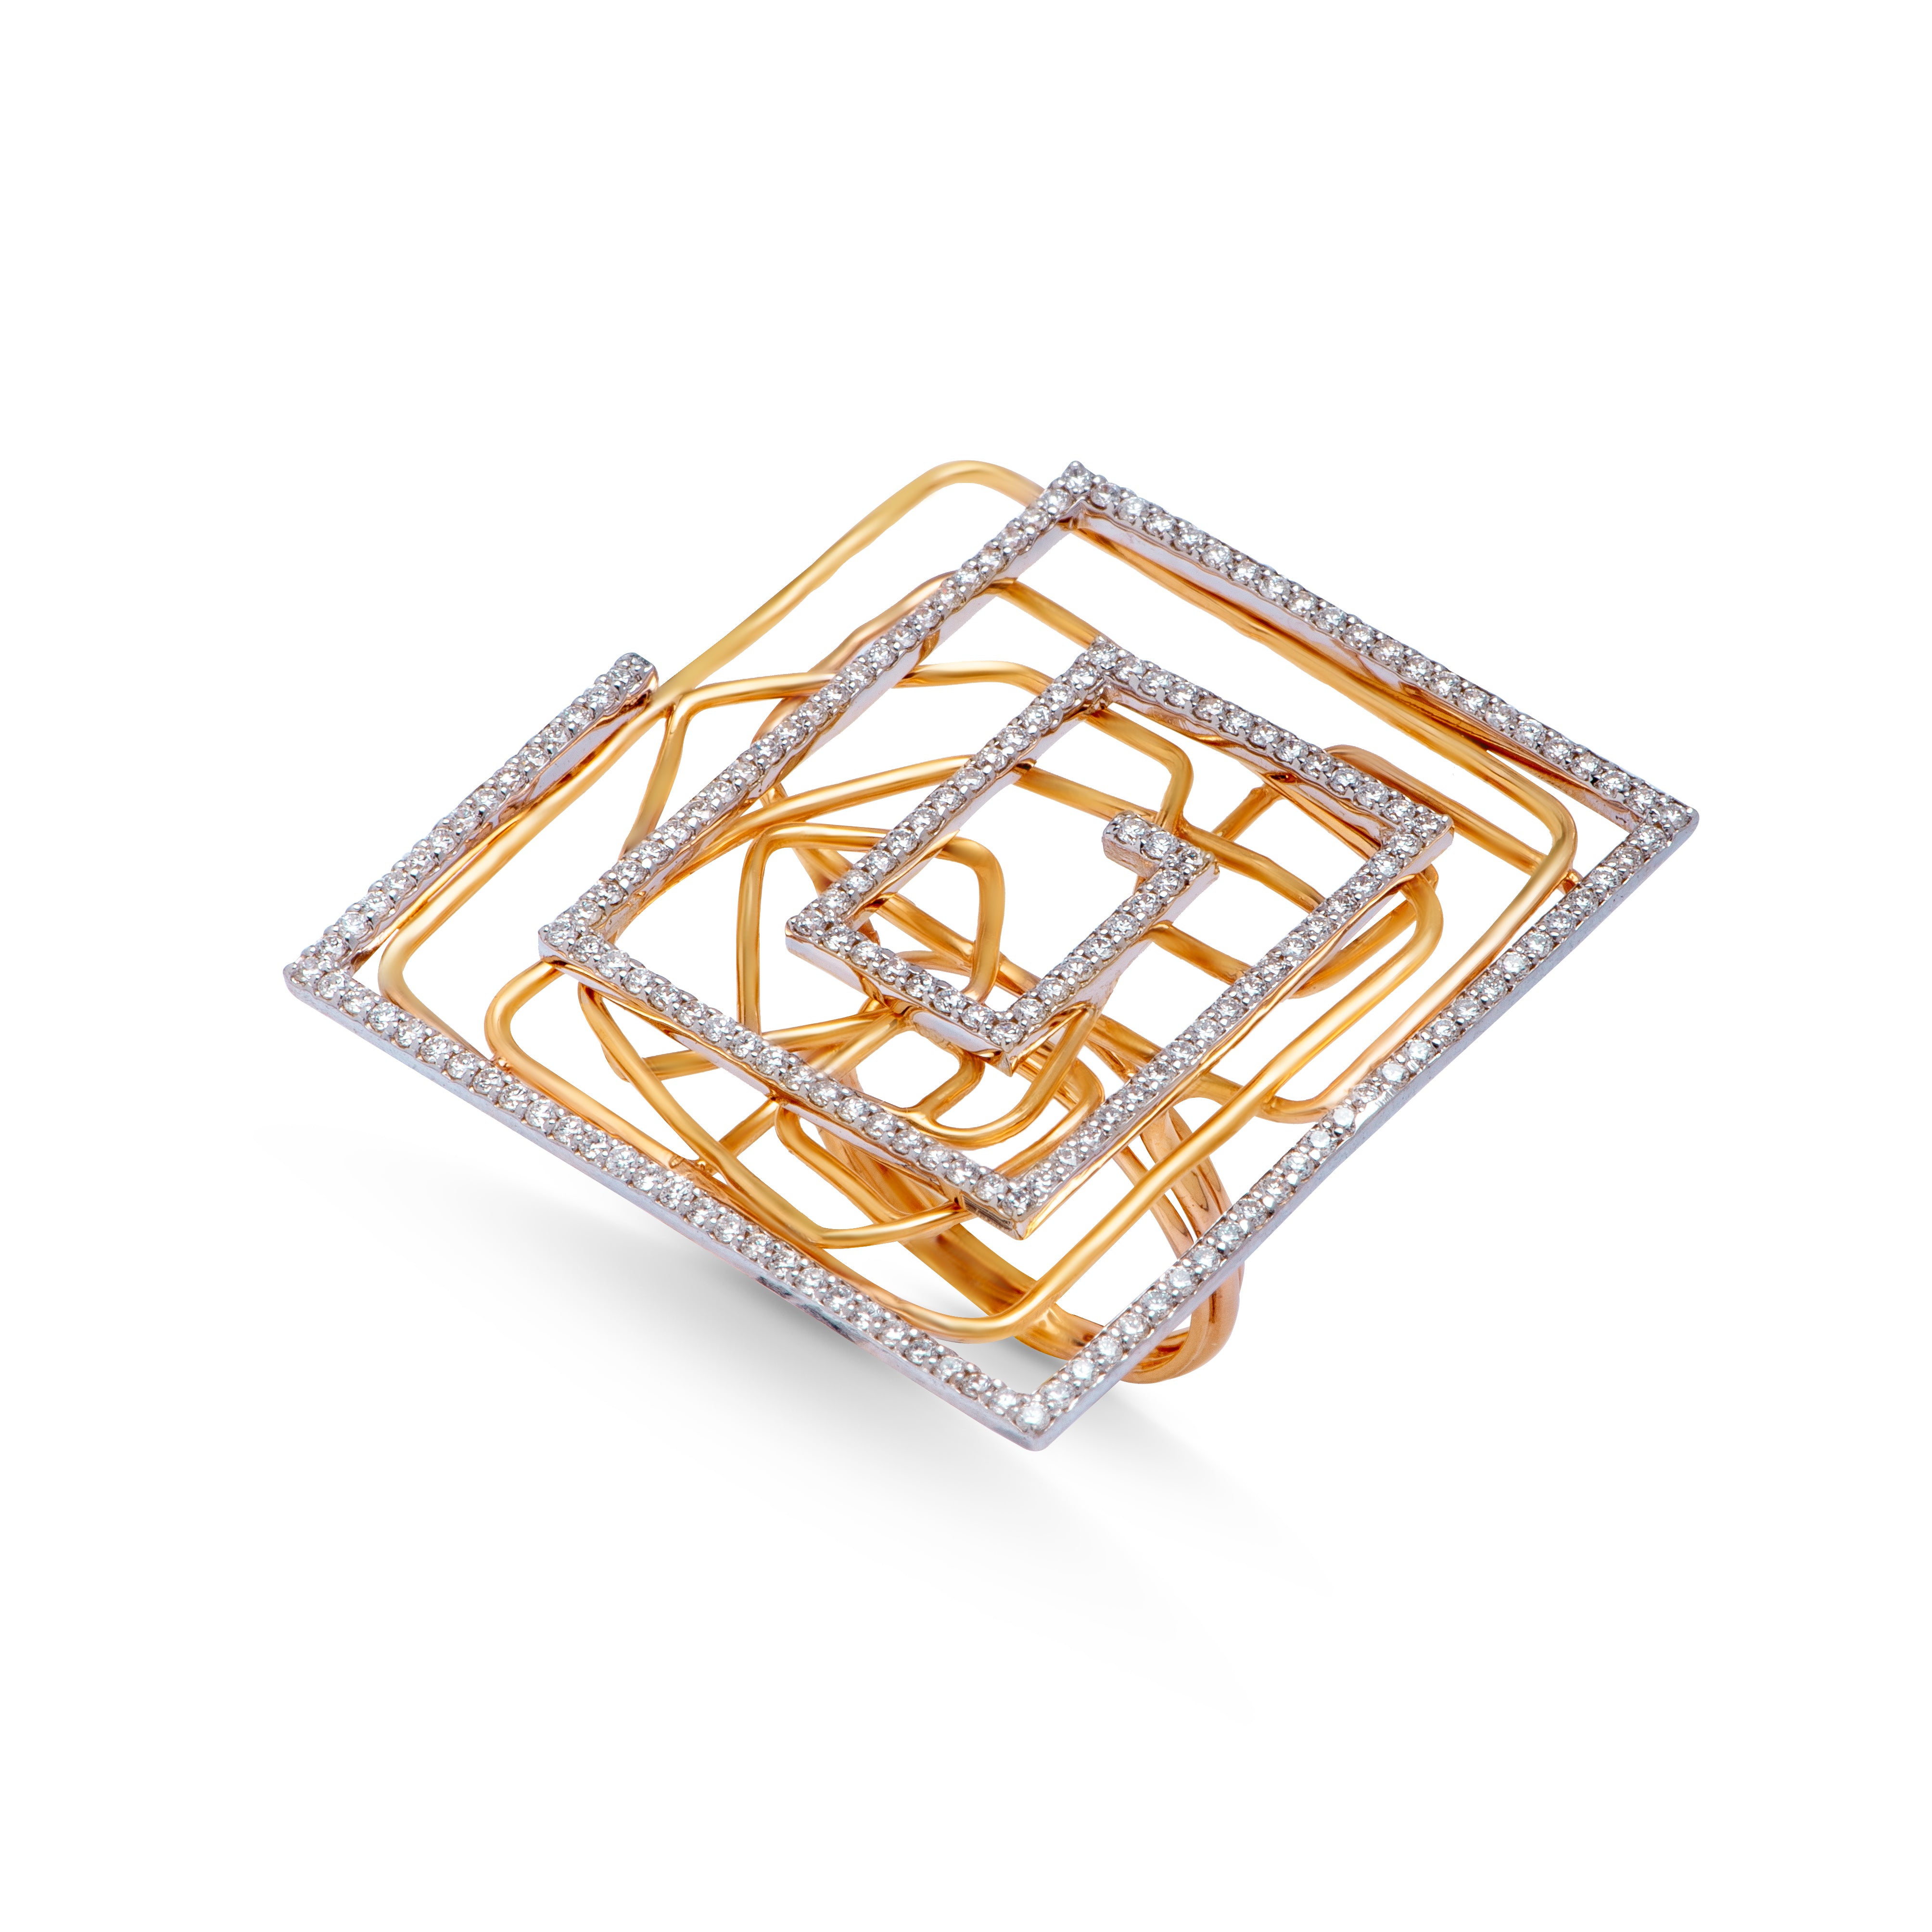 Stunning Tirette Diamond Ring in 18K Gold - SIR504C